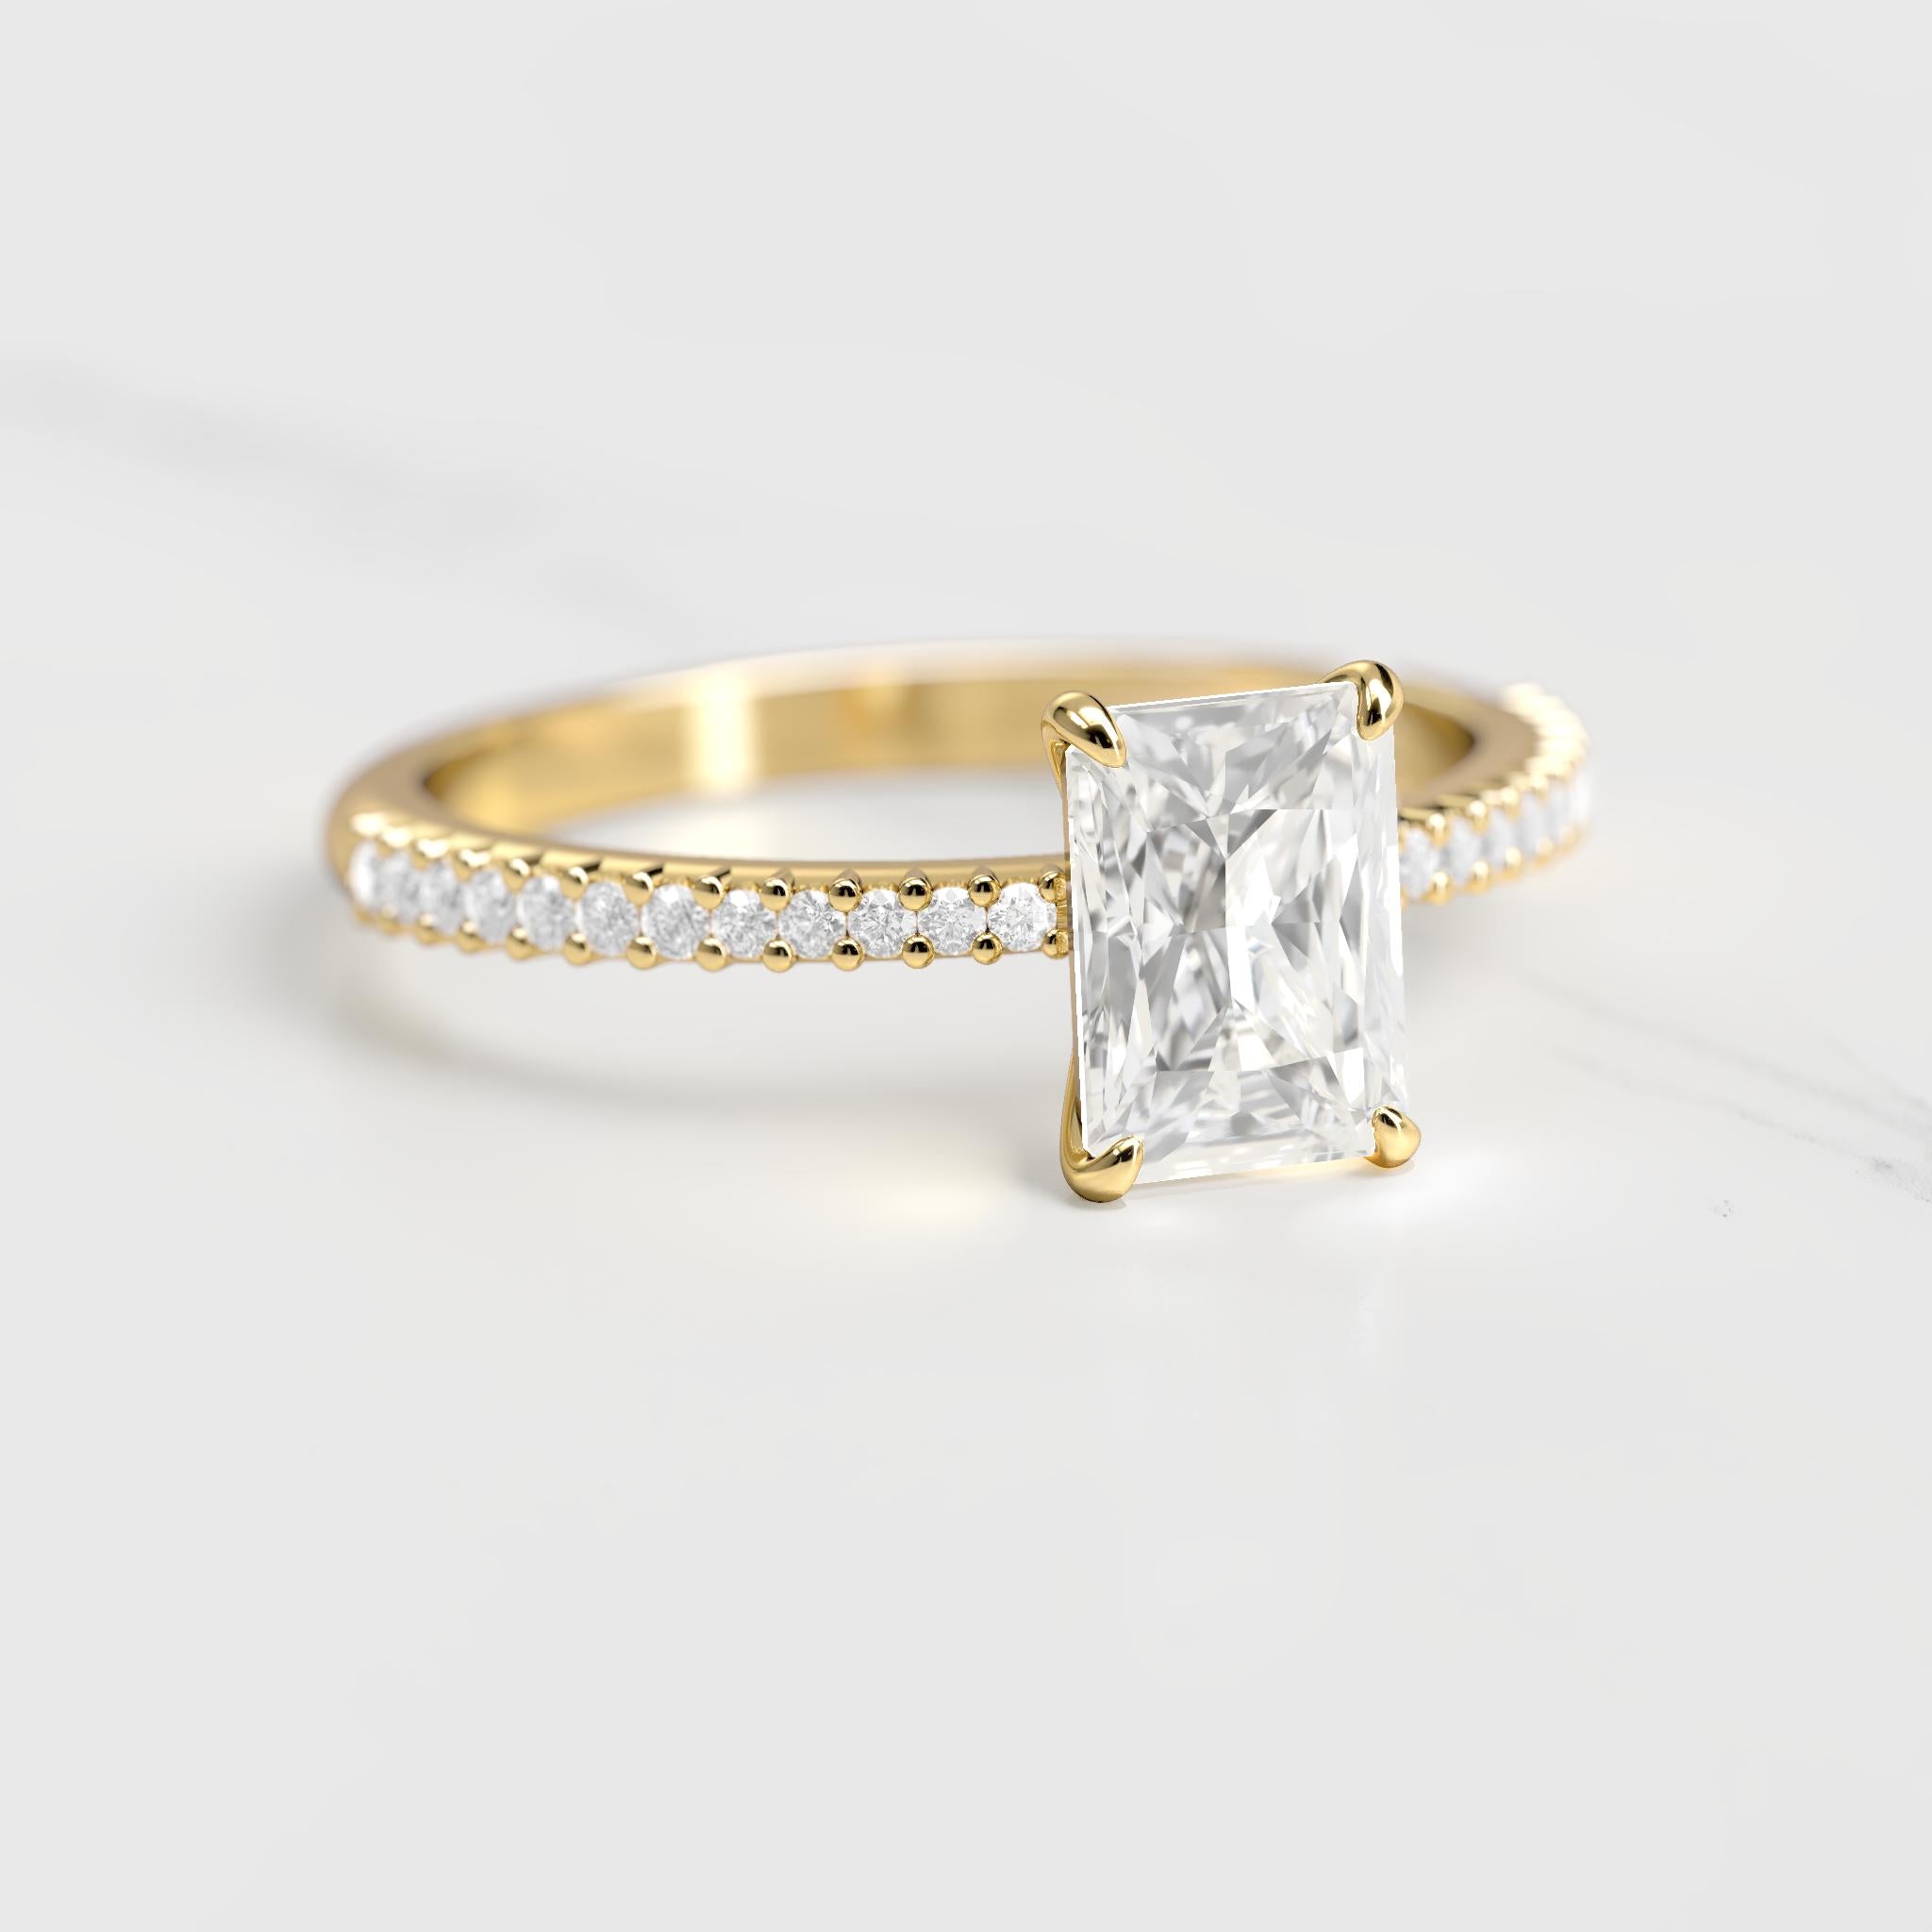 RADIANT HALF PAVE TAPERED DIAMOND RING - 14k white gold / 1.25ct / natural diamond